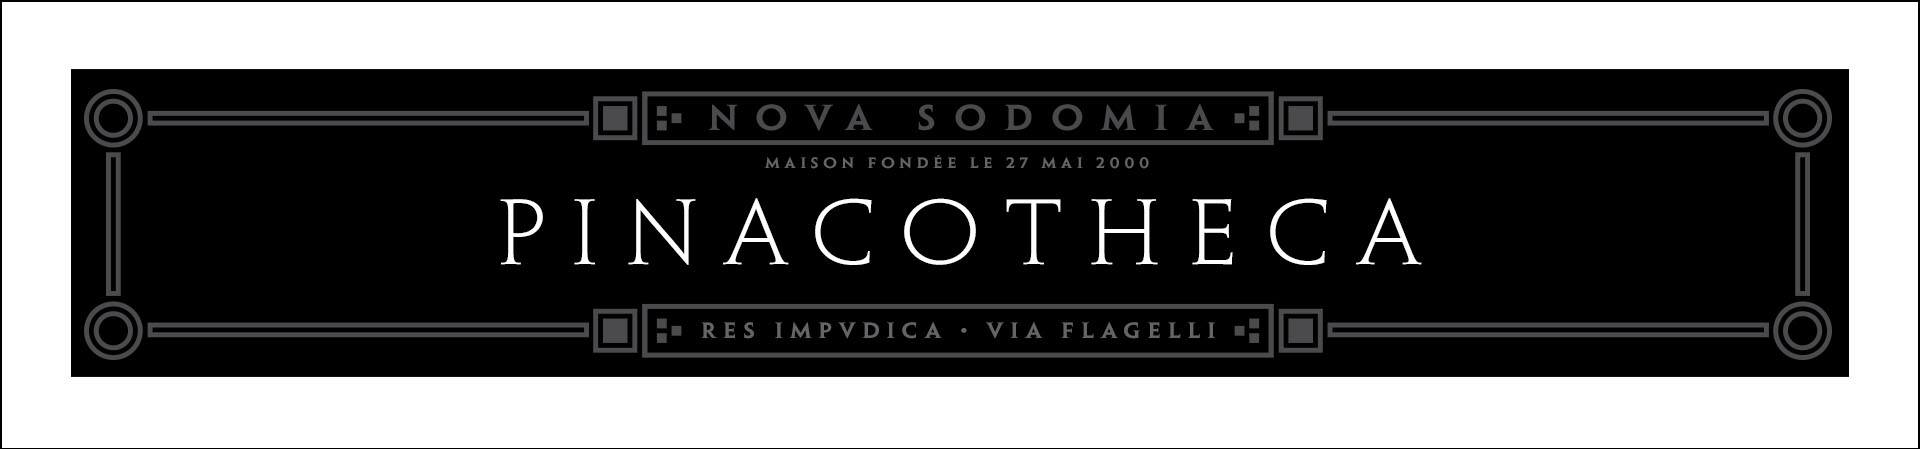 Nova Sodomia - Pinacotheca